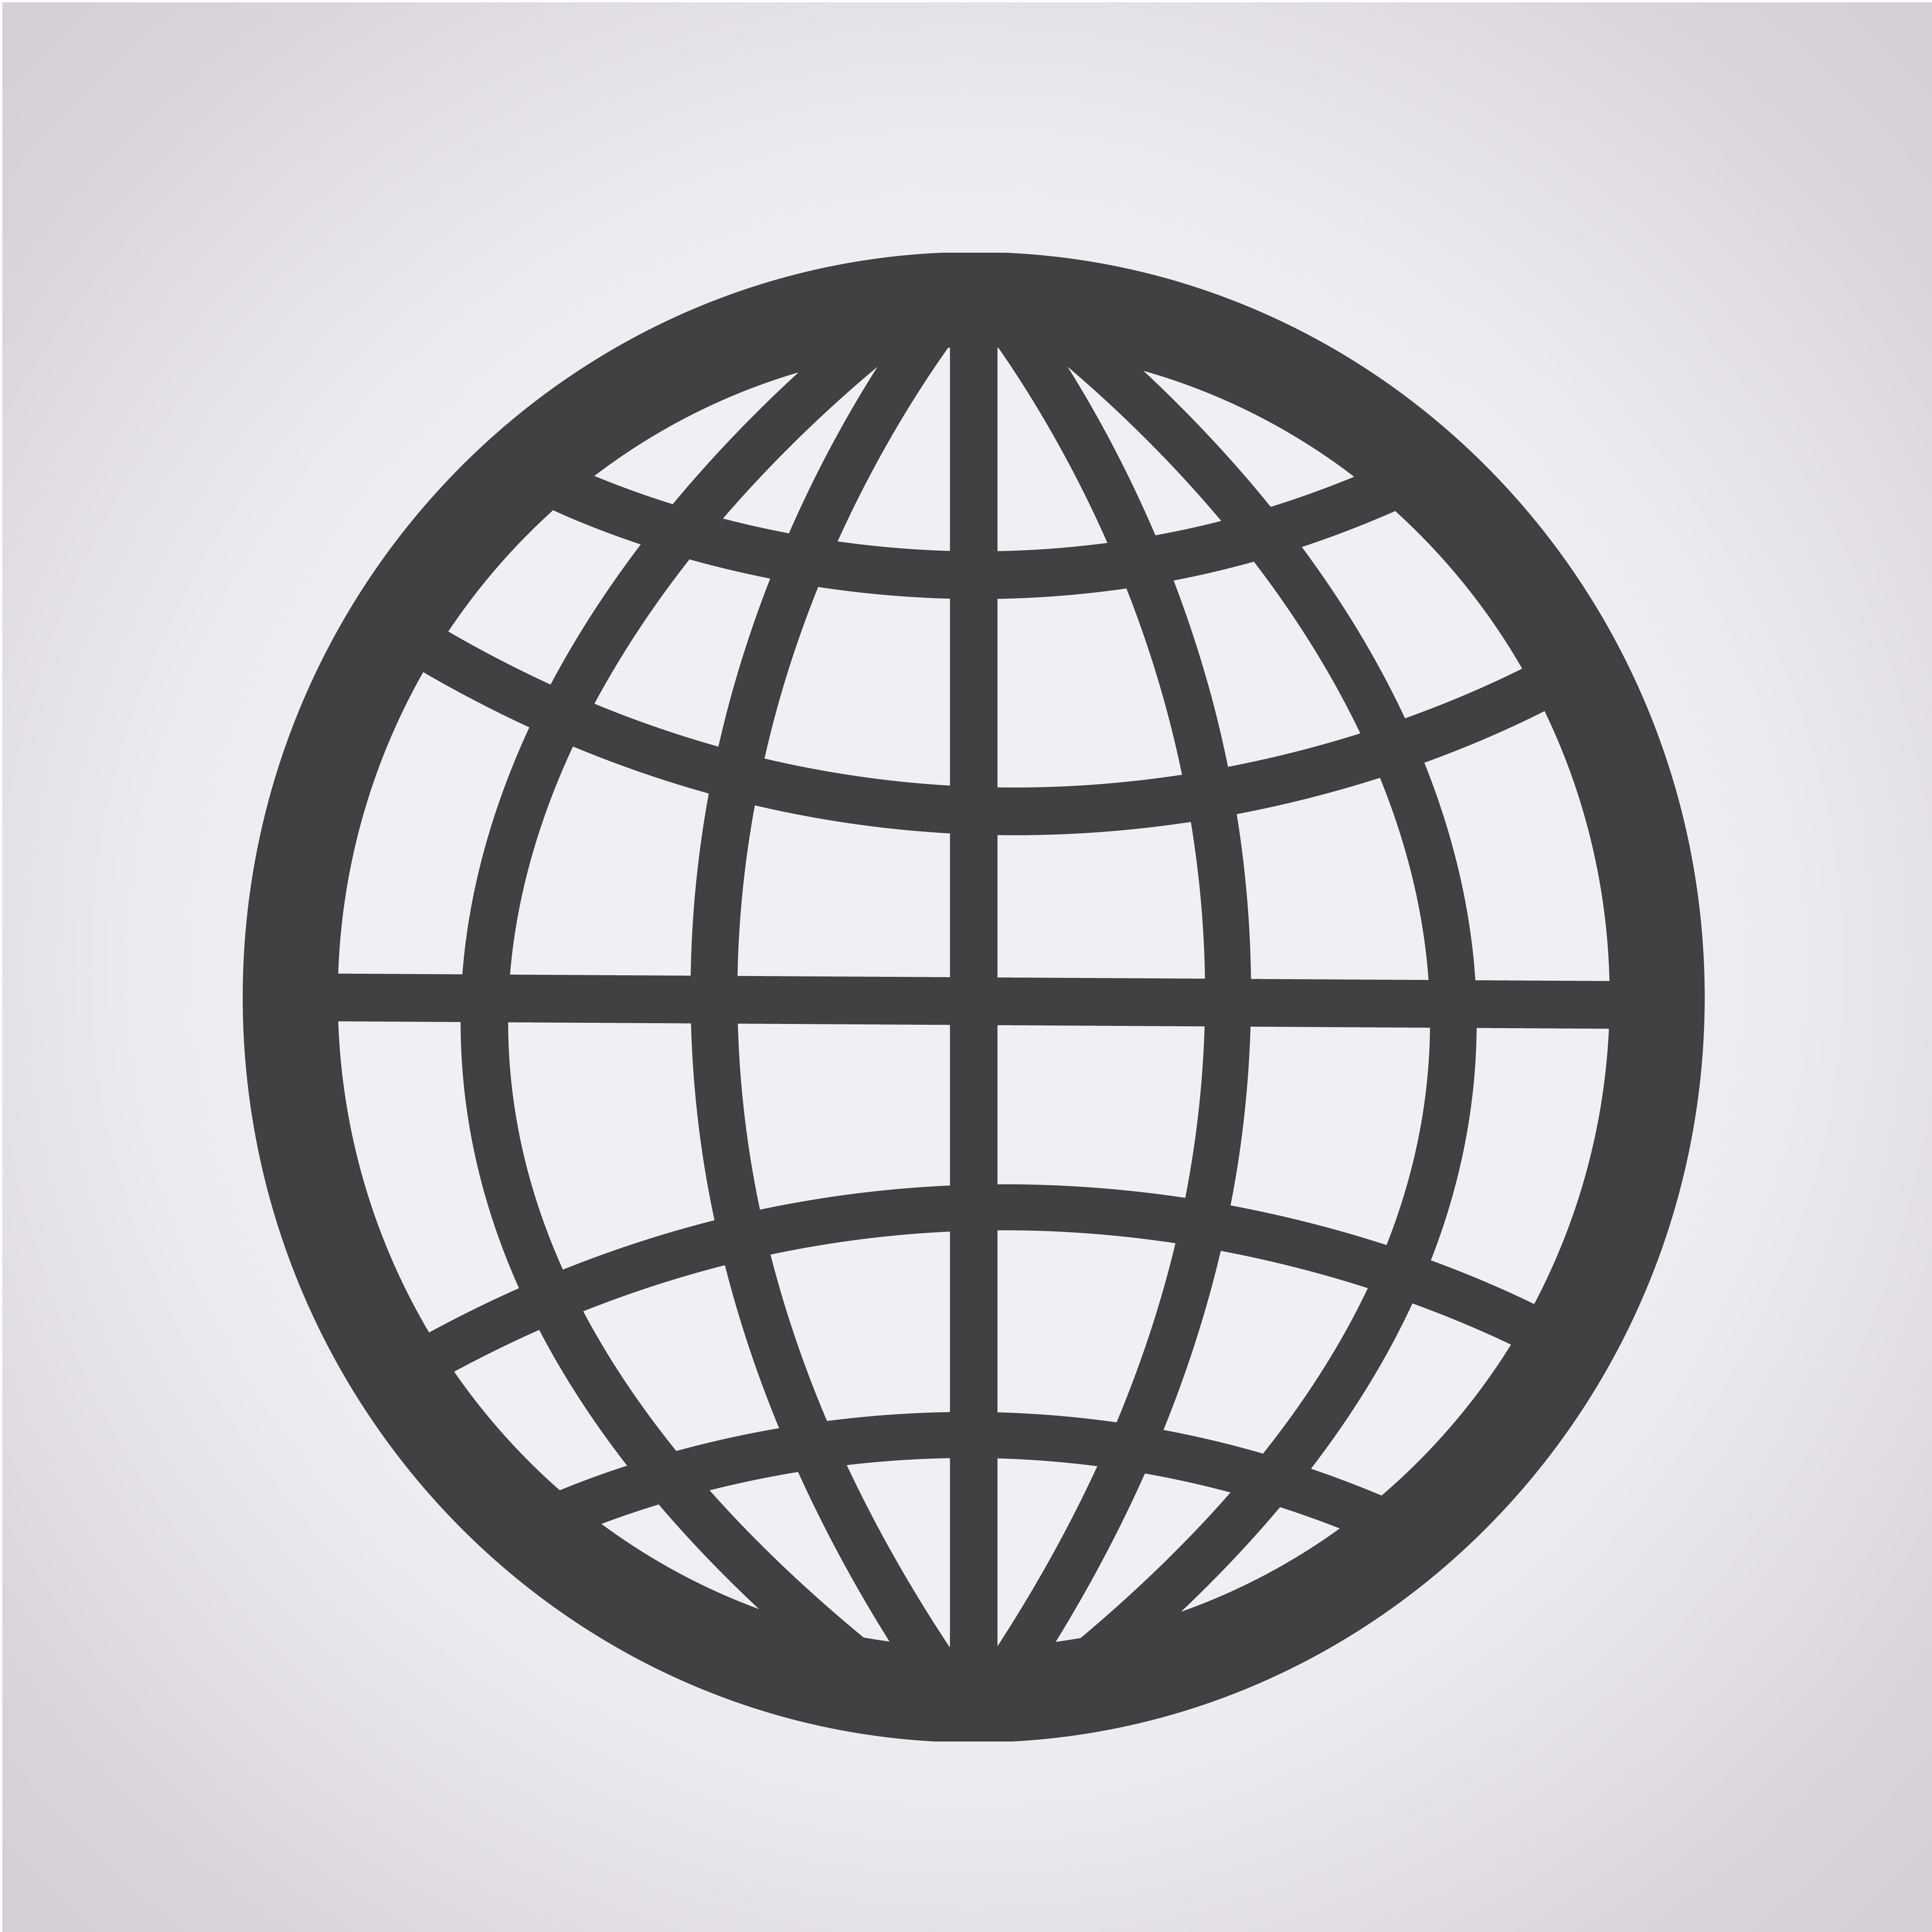 Download Globe Icon symbol sign - Download Free Vectors, Clipart Graphics & Vector Art